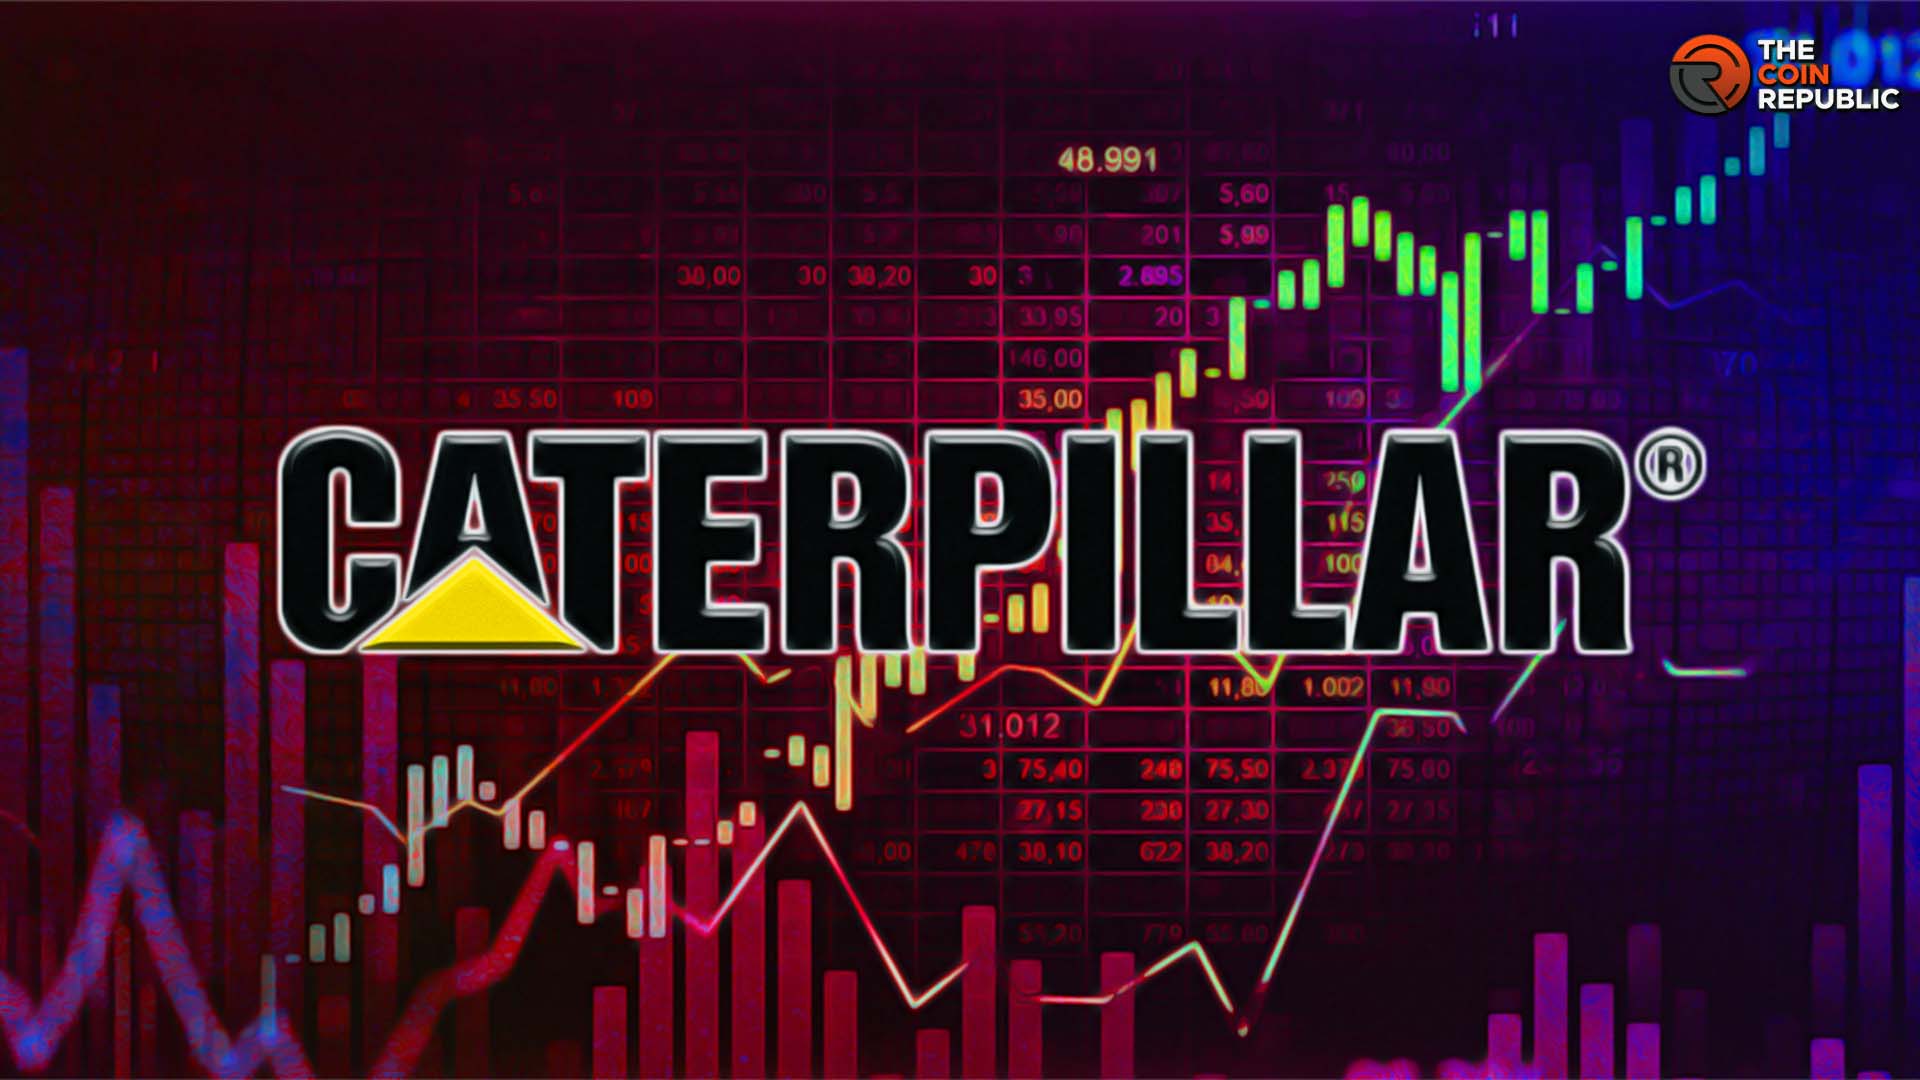 Caterpillar Inc (CAT) Stock Price Showed Slower Price Gain